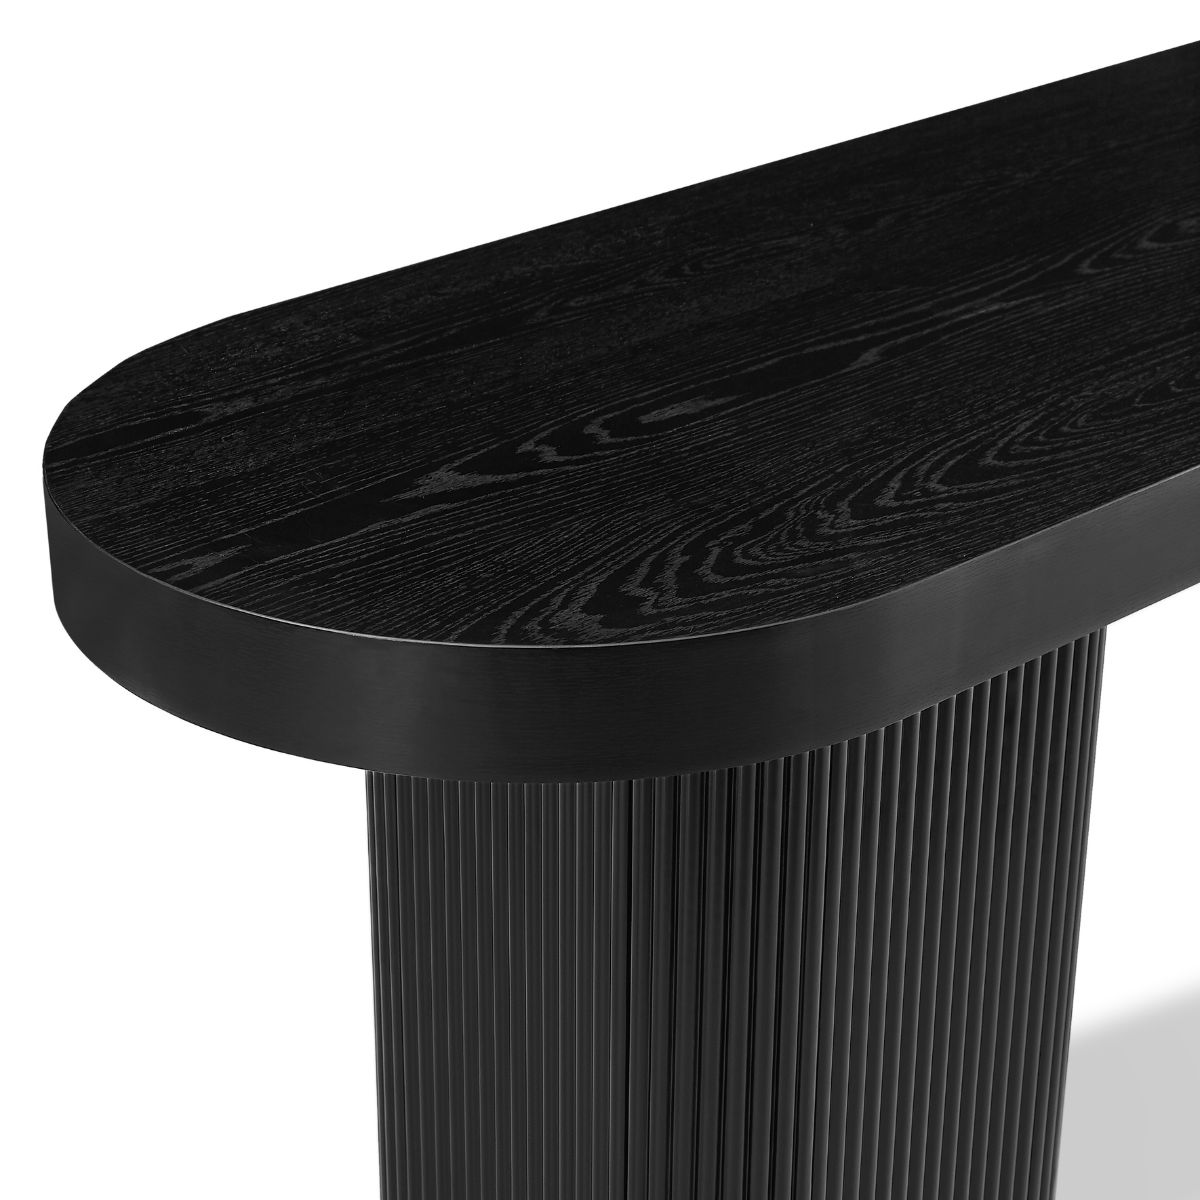 Tate Console Table - Black